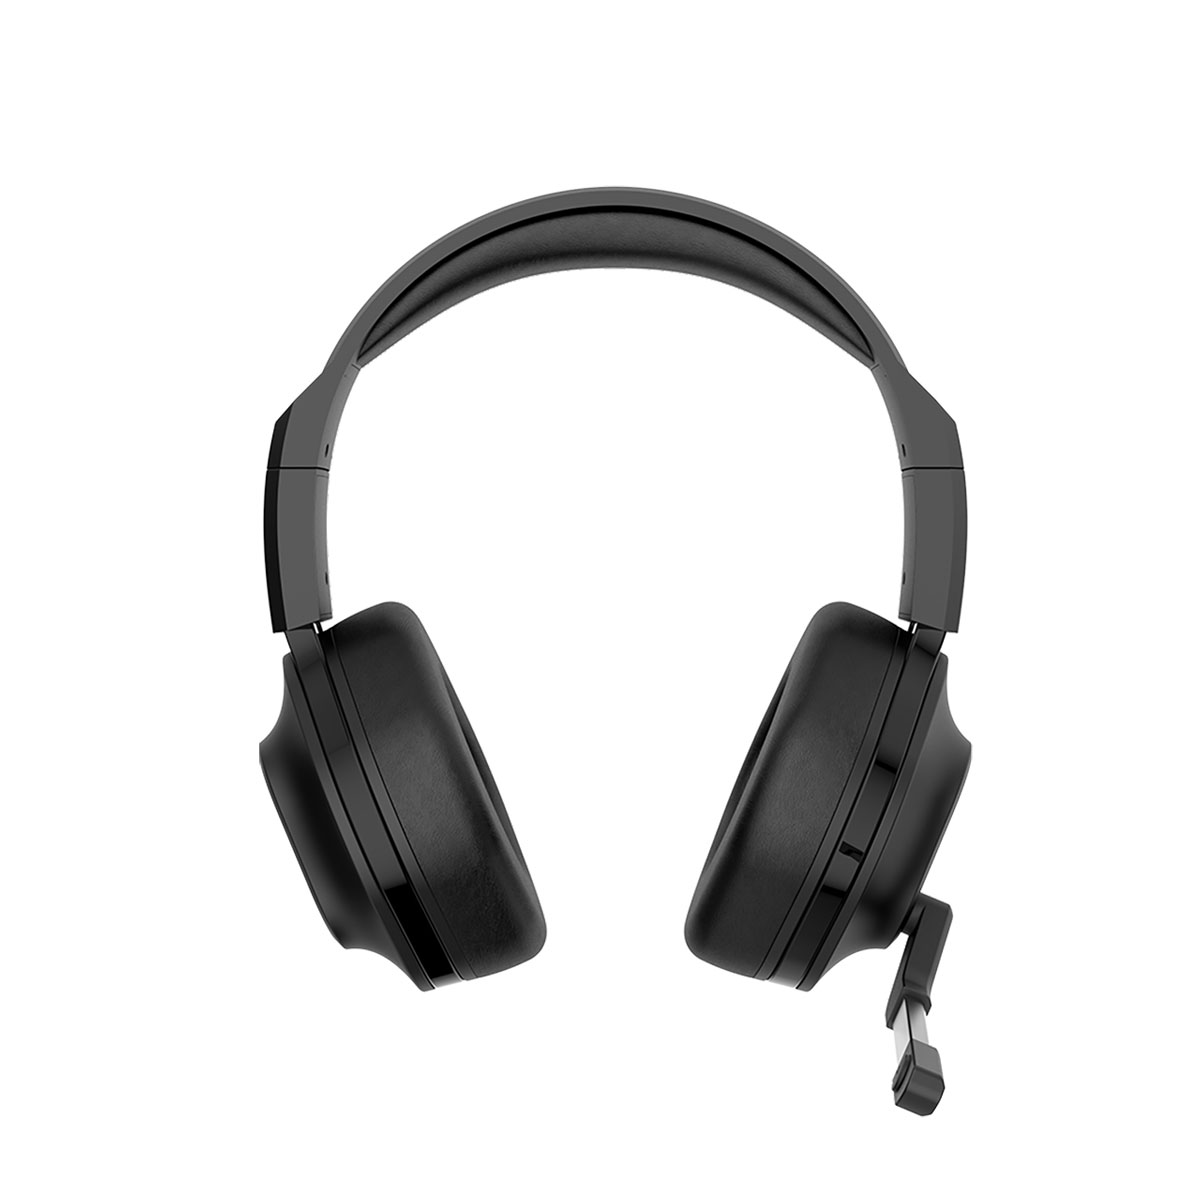 hg8929-headset-03